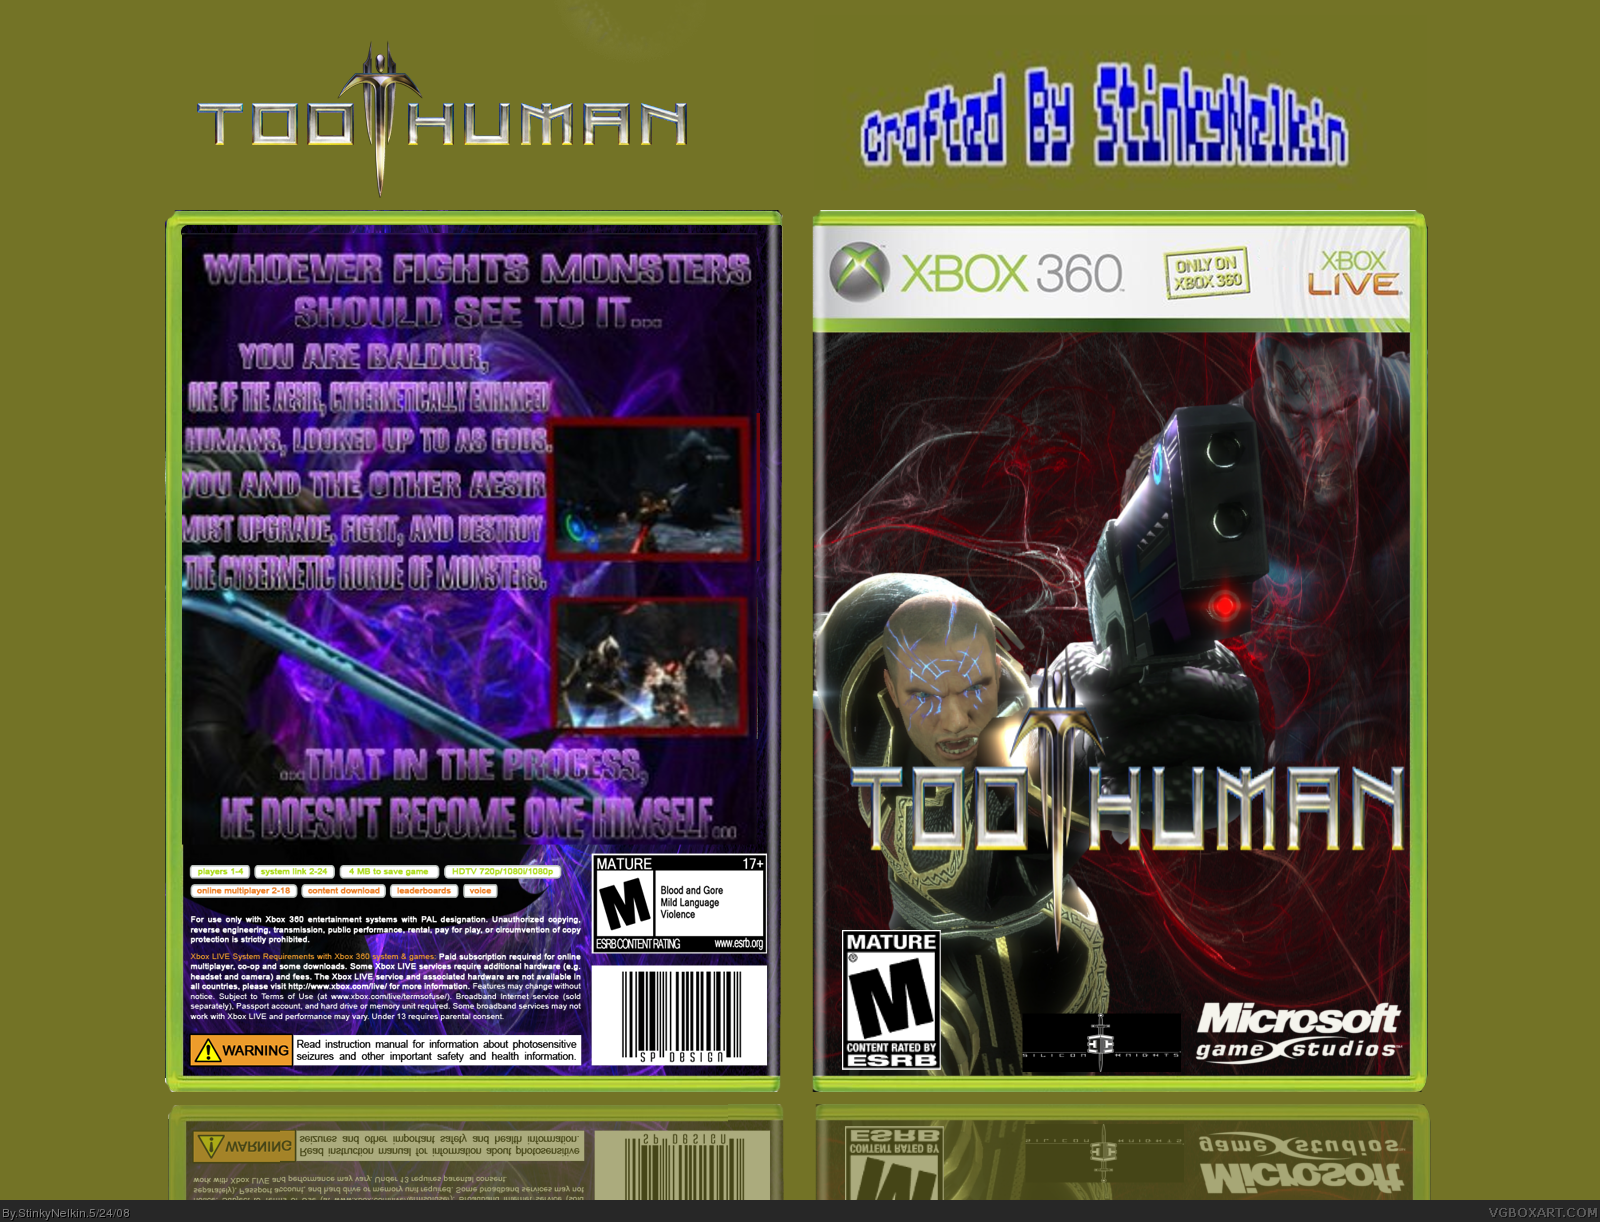 Too Human box cover